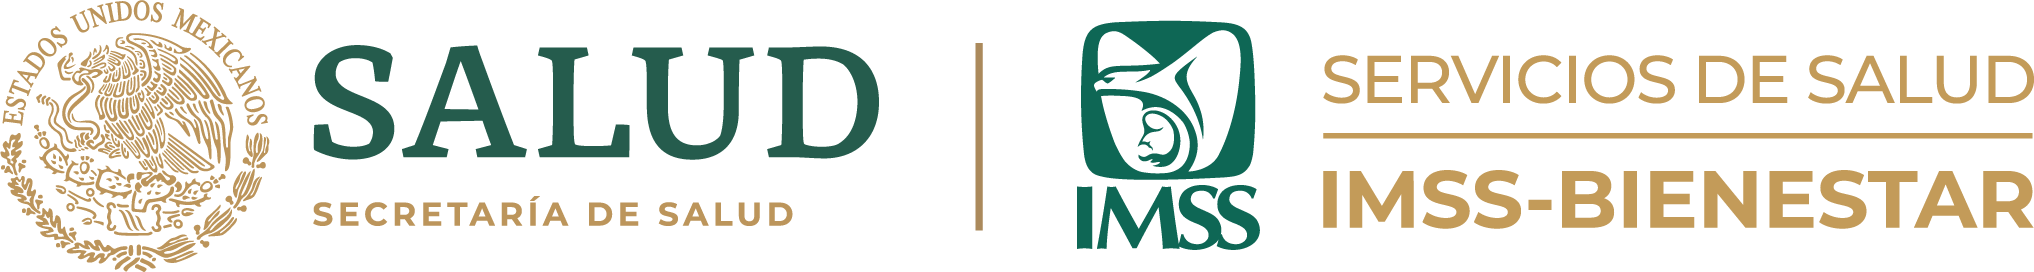 imss-bienestar logo